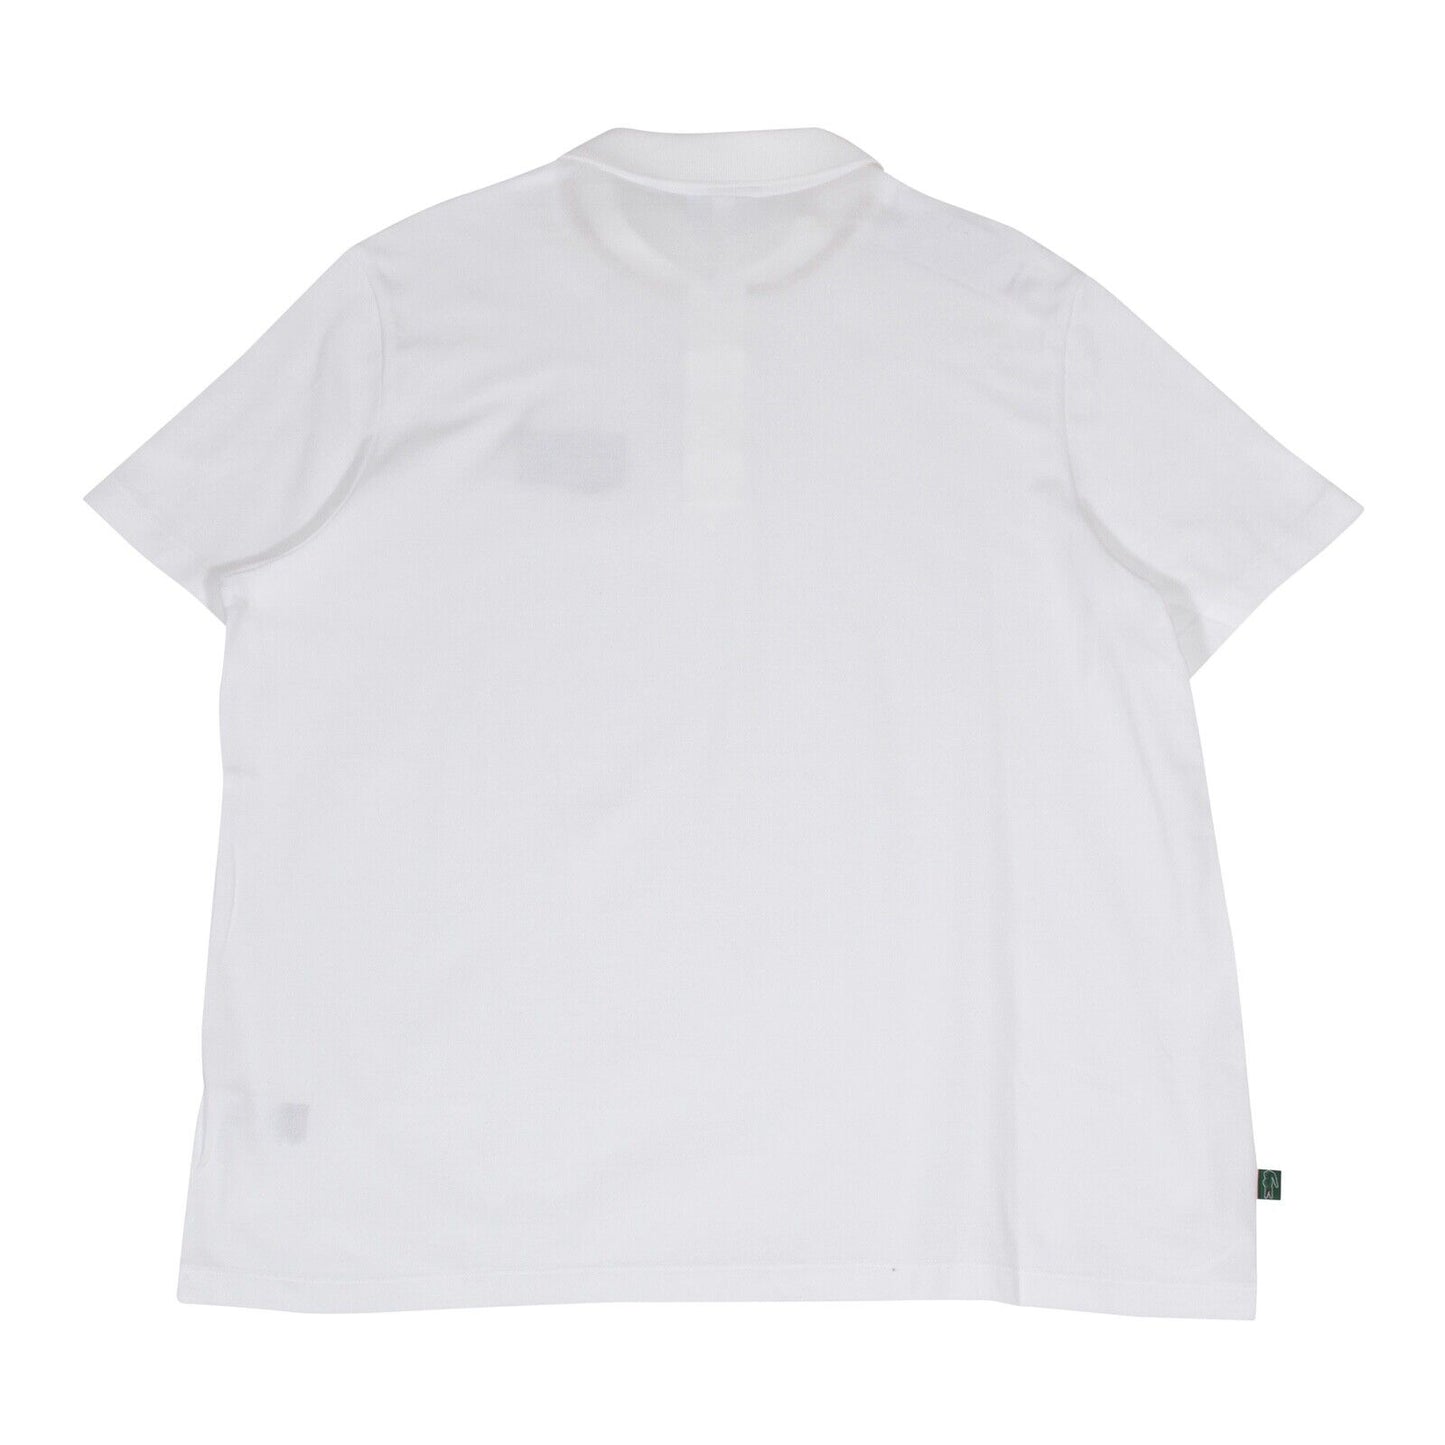 Lacoste Men's Heritage Regular Fit Badge Piqué Polo in White PH2027-51 001